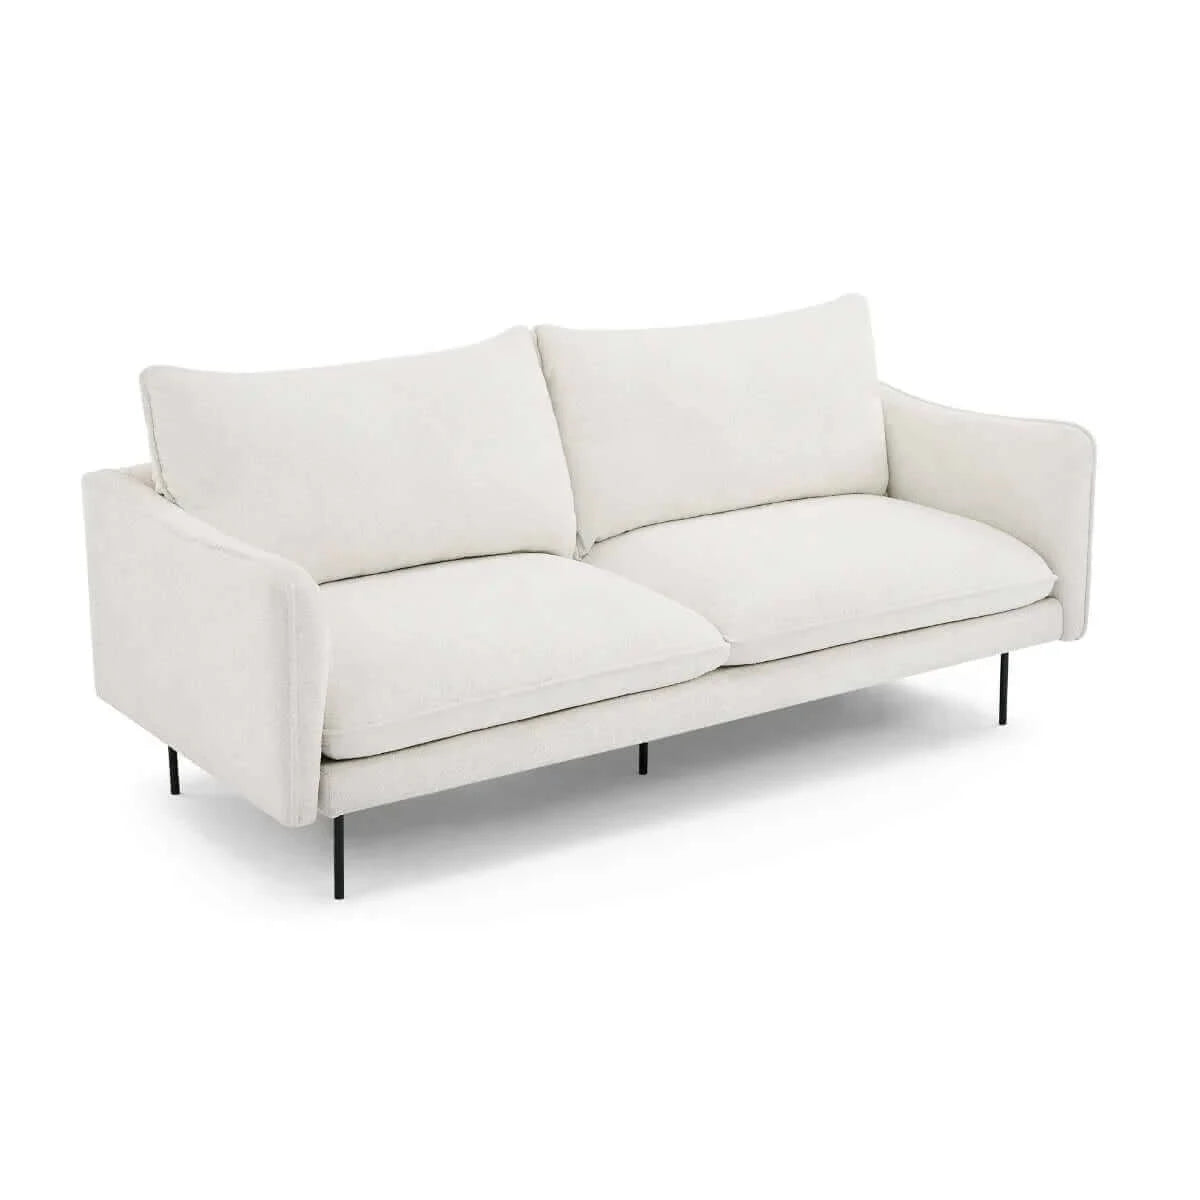 Buy jasmine boucle 3 seater sofa - upinteriors-Upinteriors